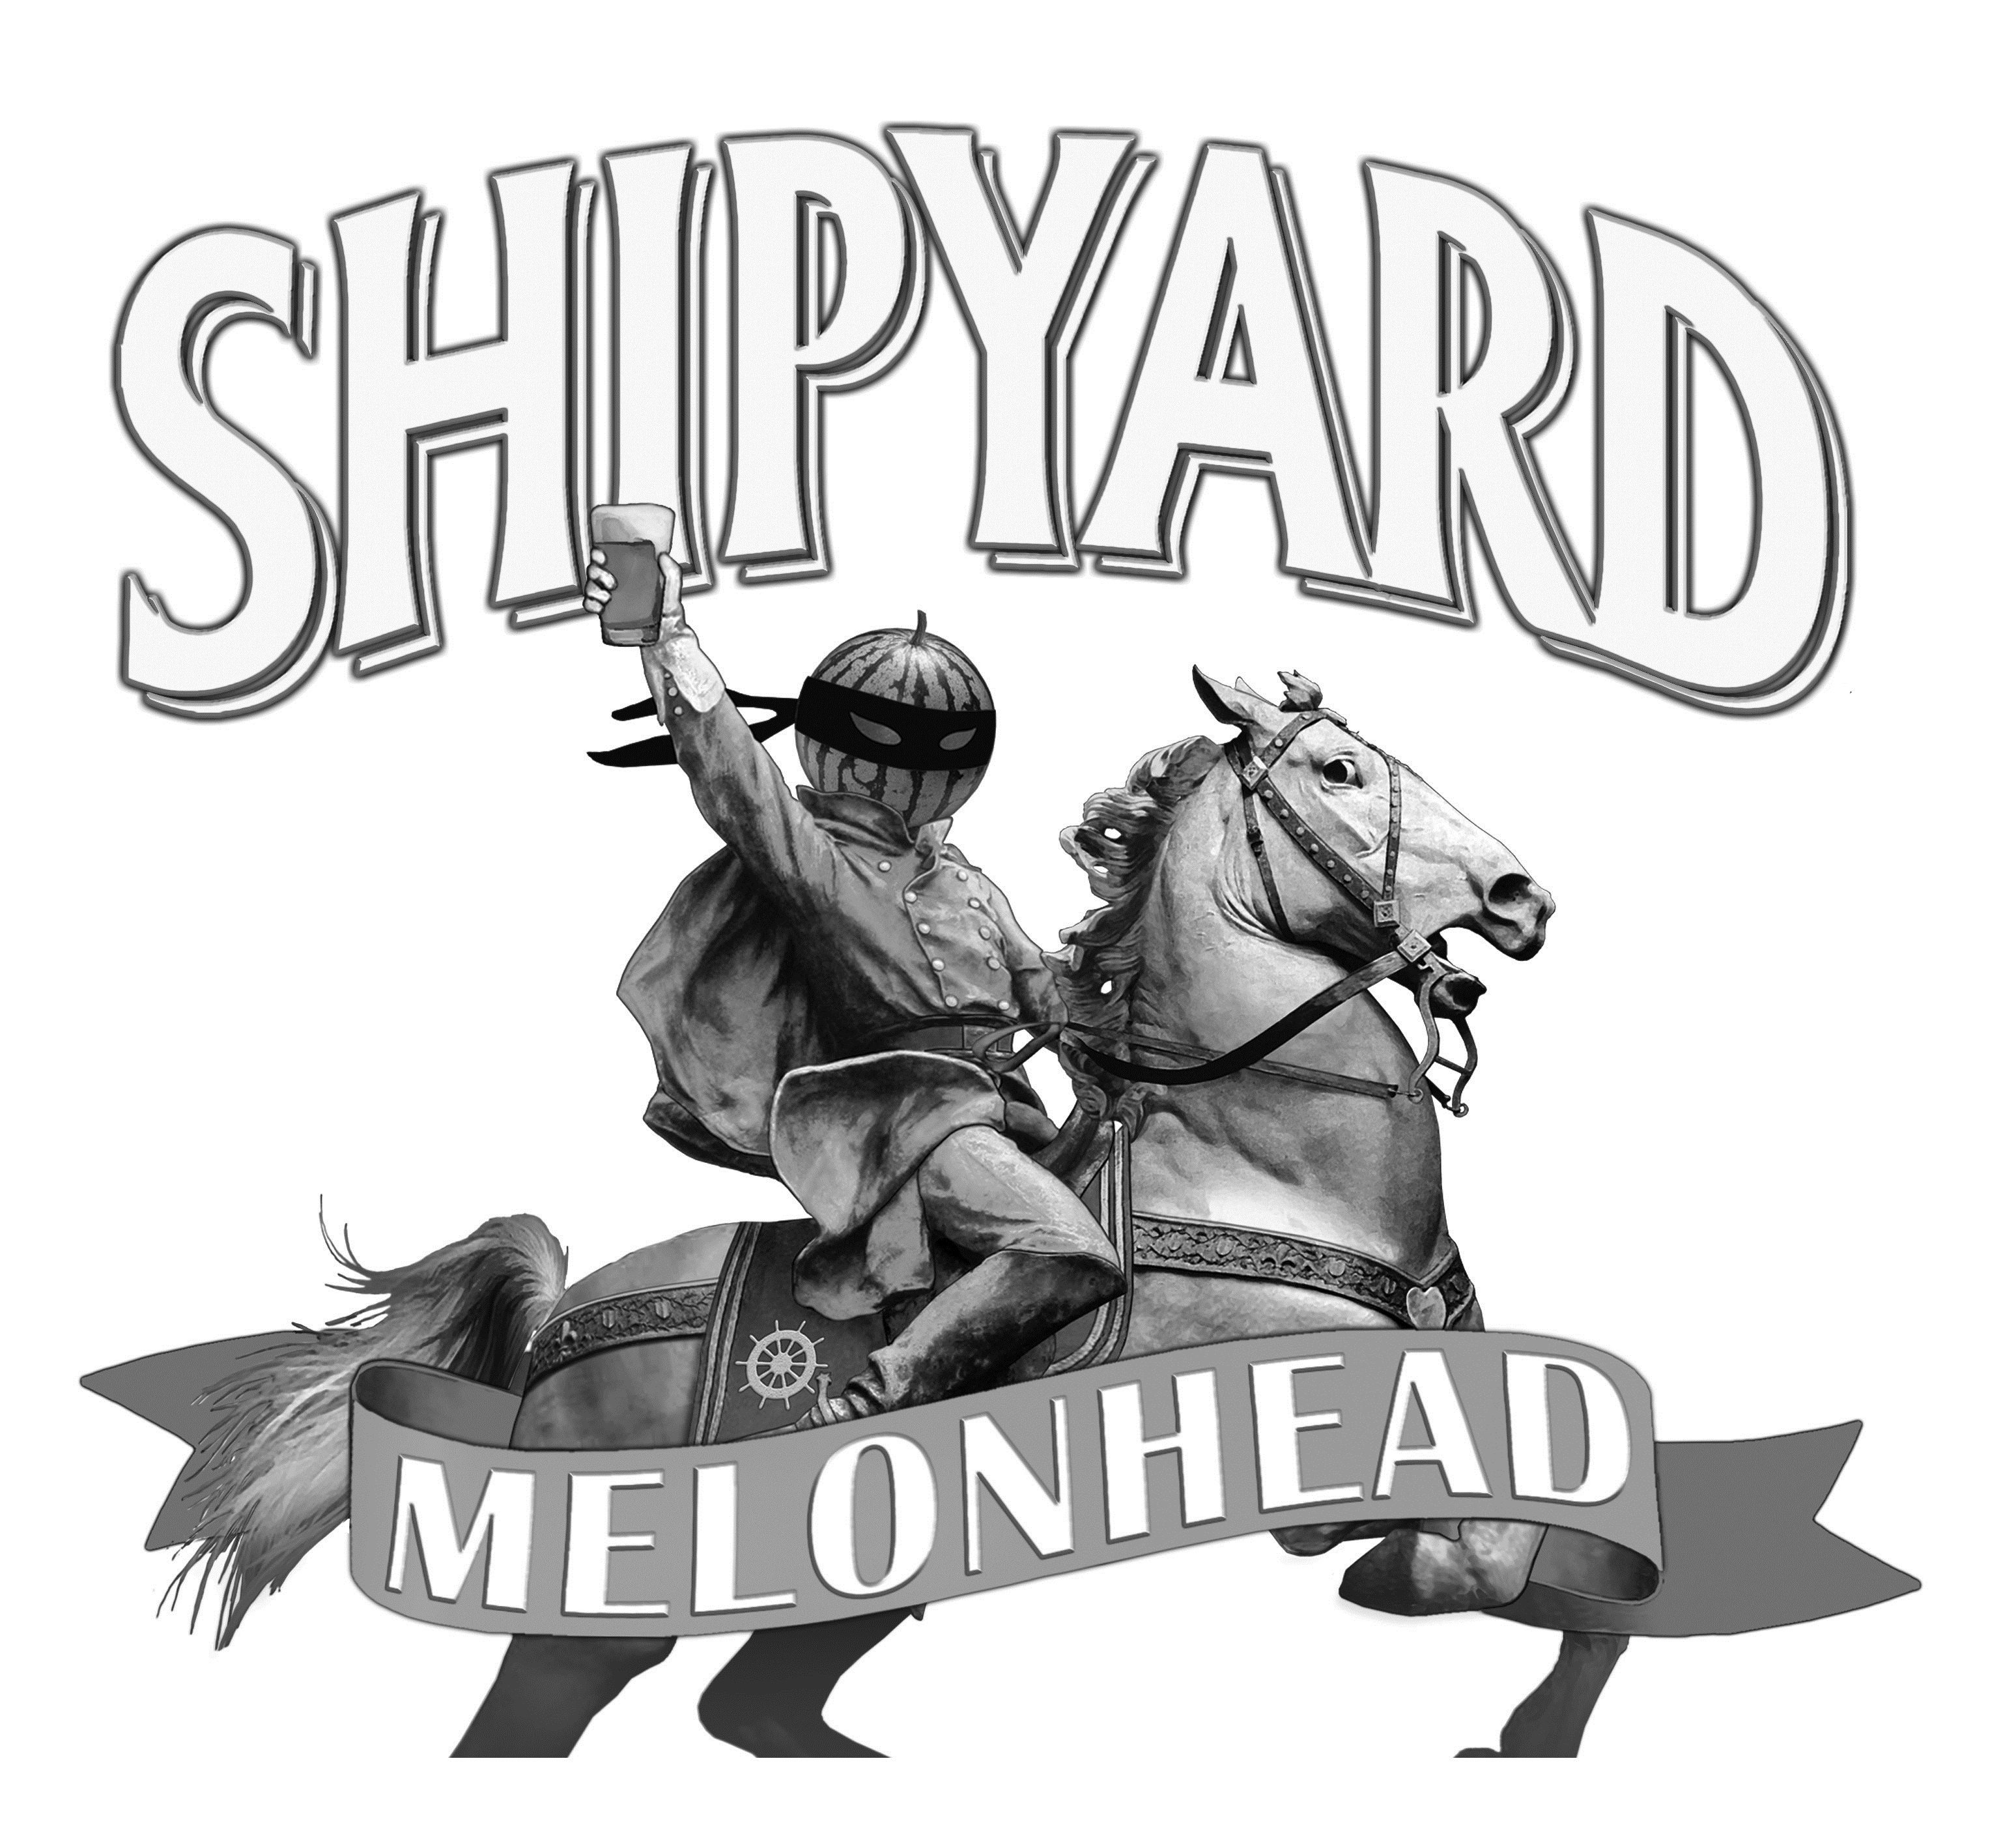  SHIPYARD MELONHEAD